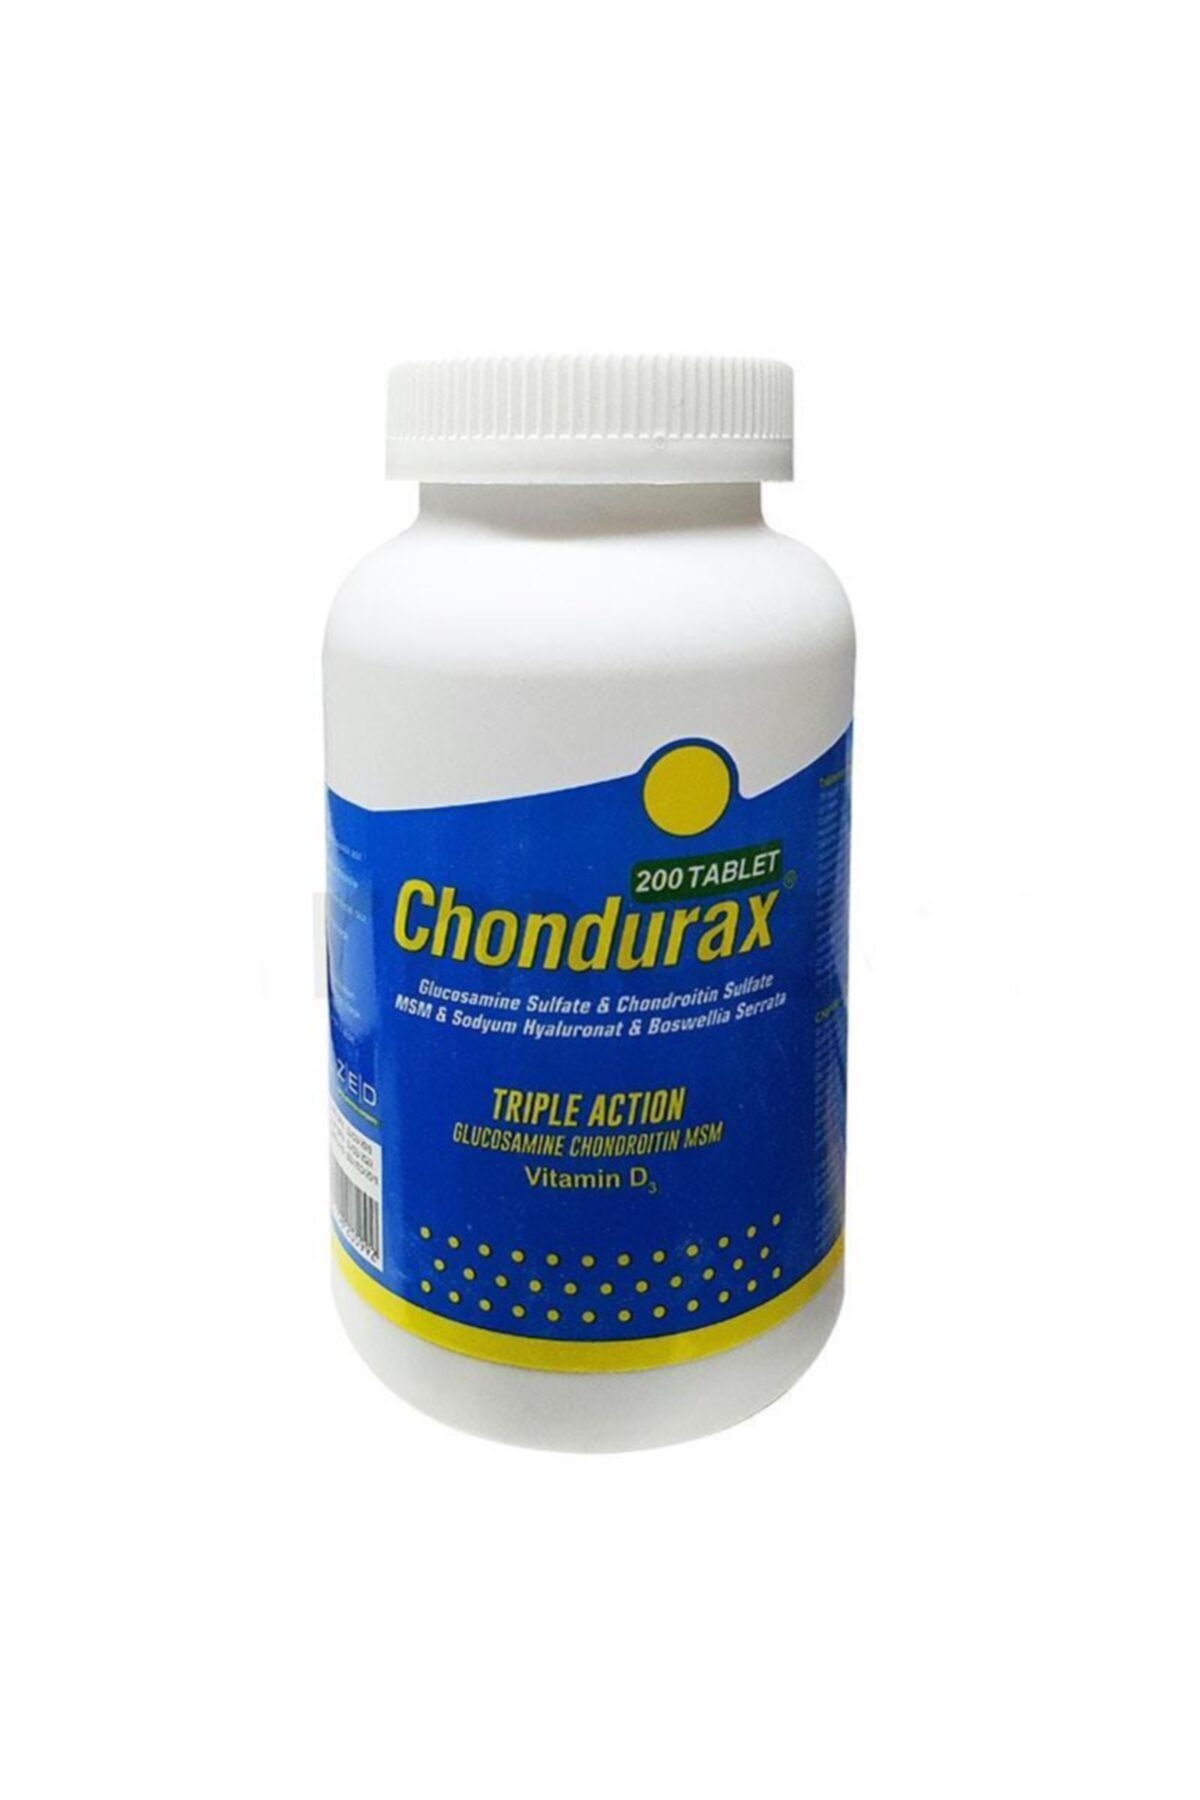 Chondurax Triple Action Glucosamine Chondroitin Msm 200 Tablet